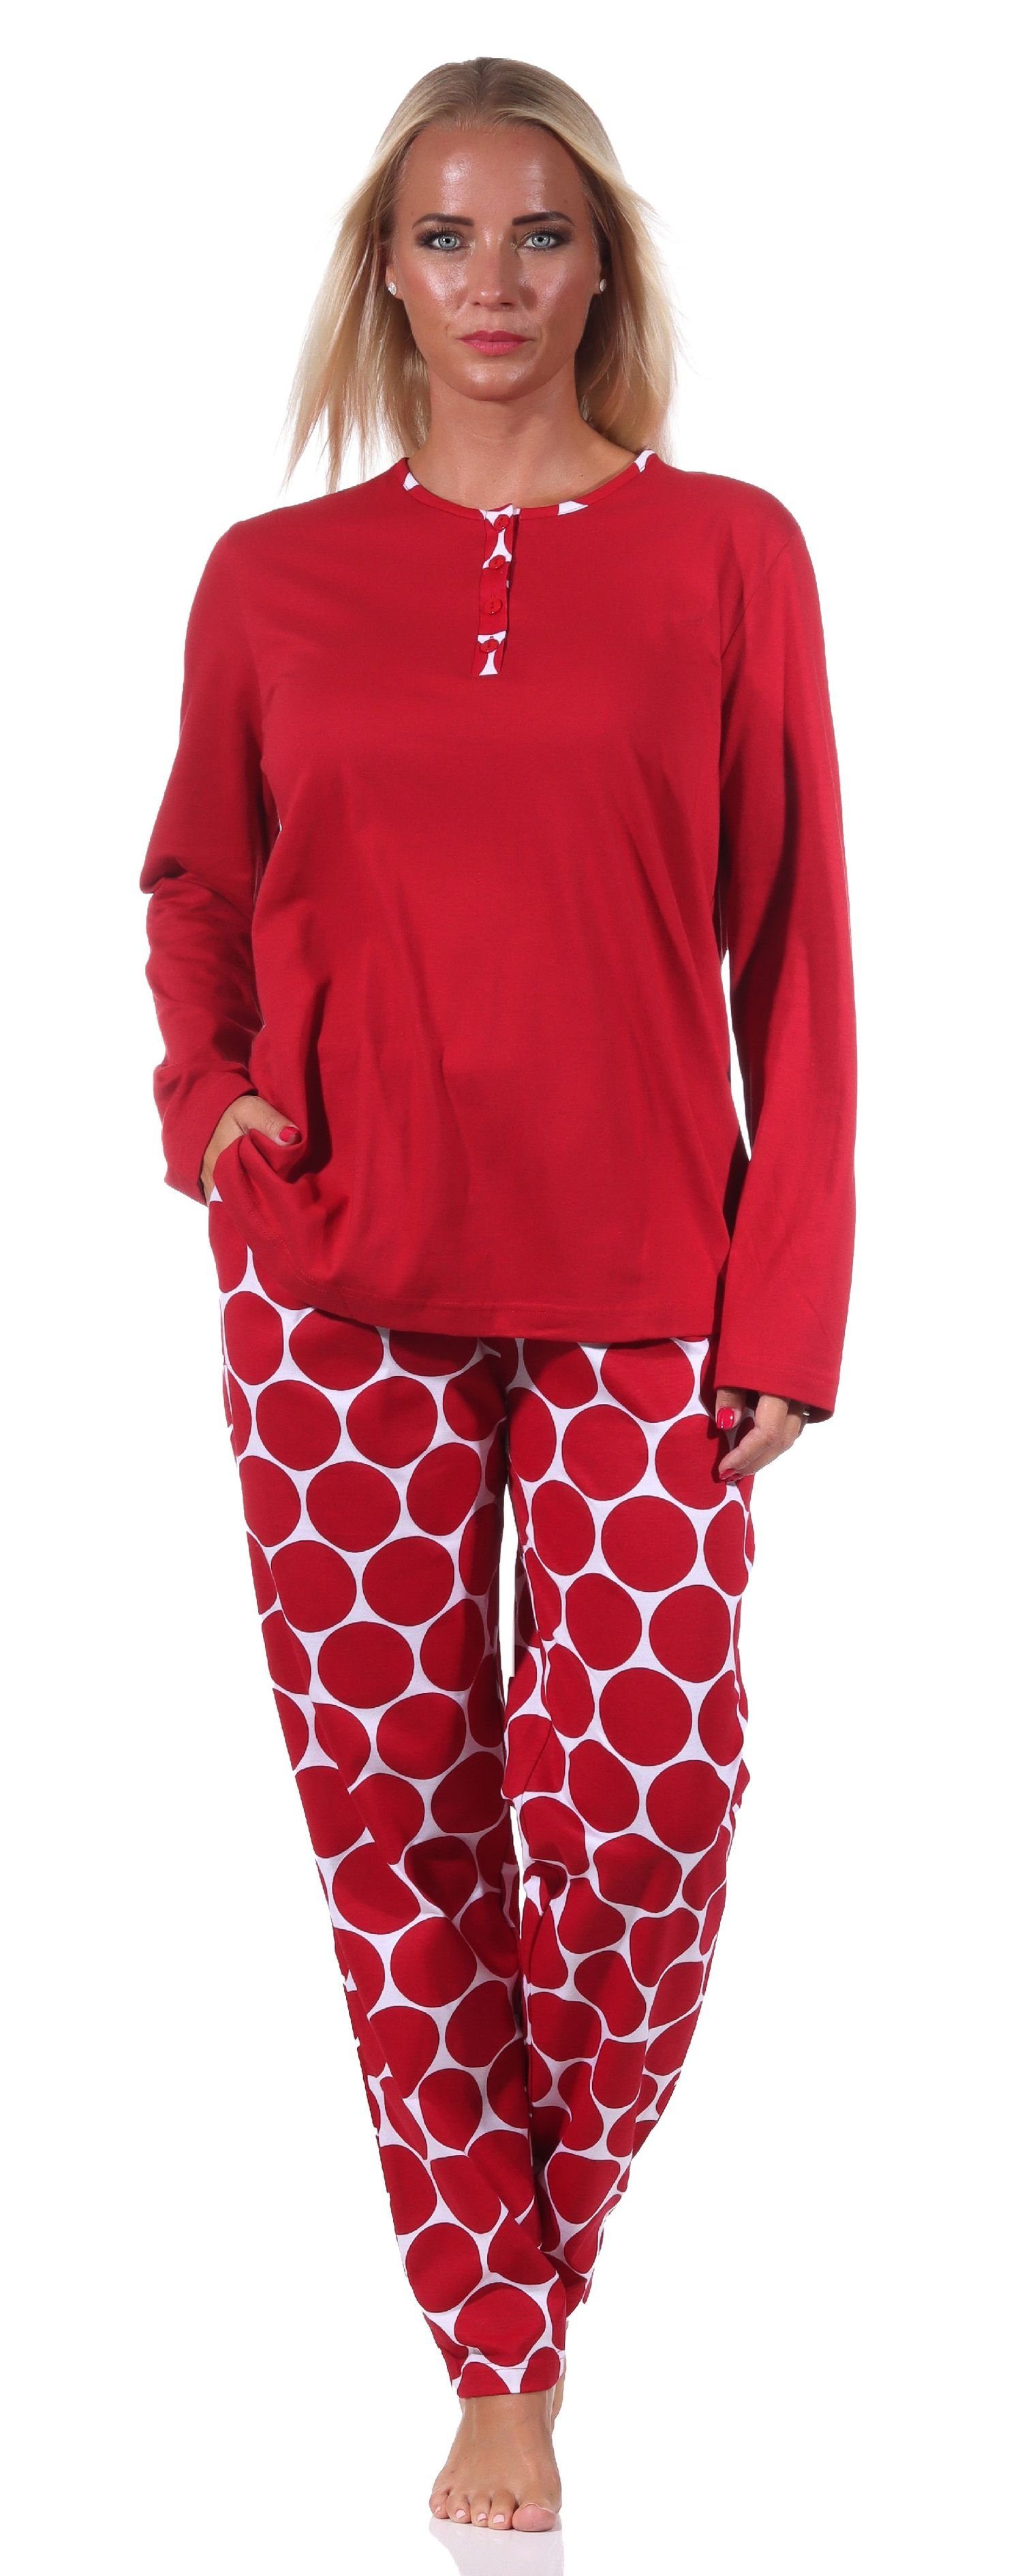 Normann Pyjama Damen Pyjama langarm Schlafanzug, Hose in Tupfen / Punkte Optik rot